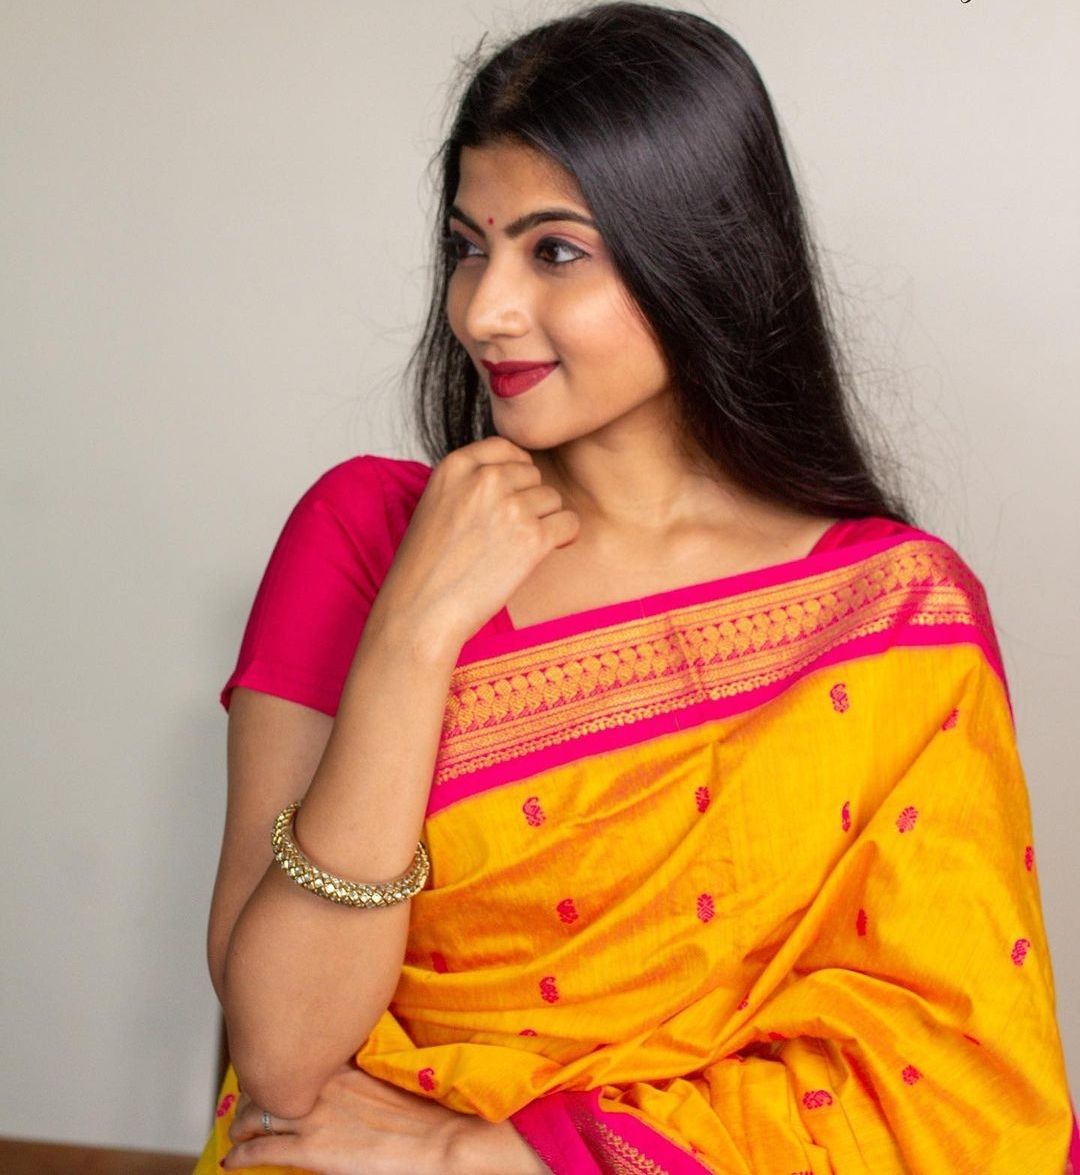 Unique Queen's Women's Premium Quality Kalyani Cotton Silk Saree